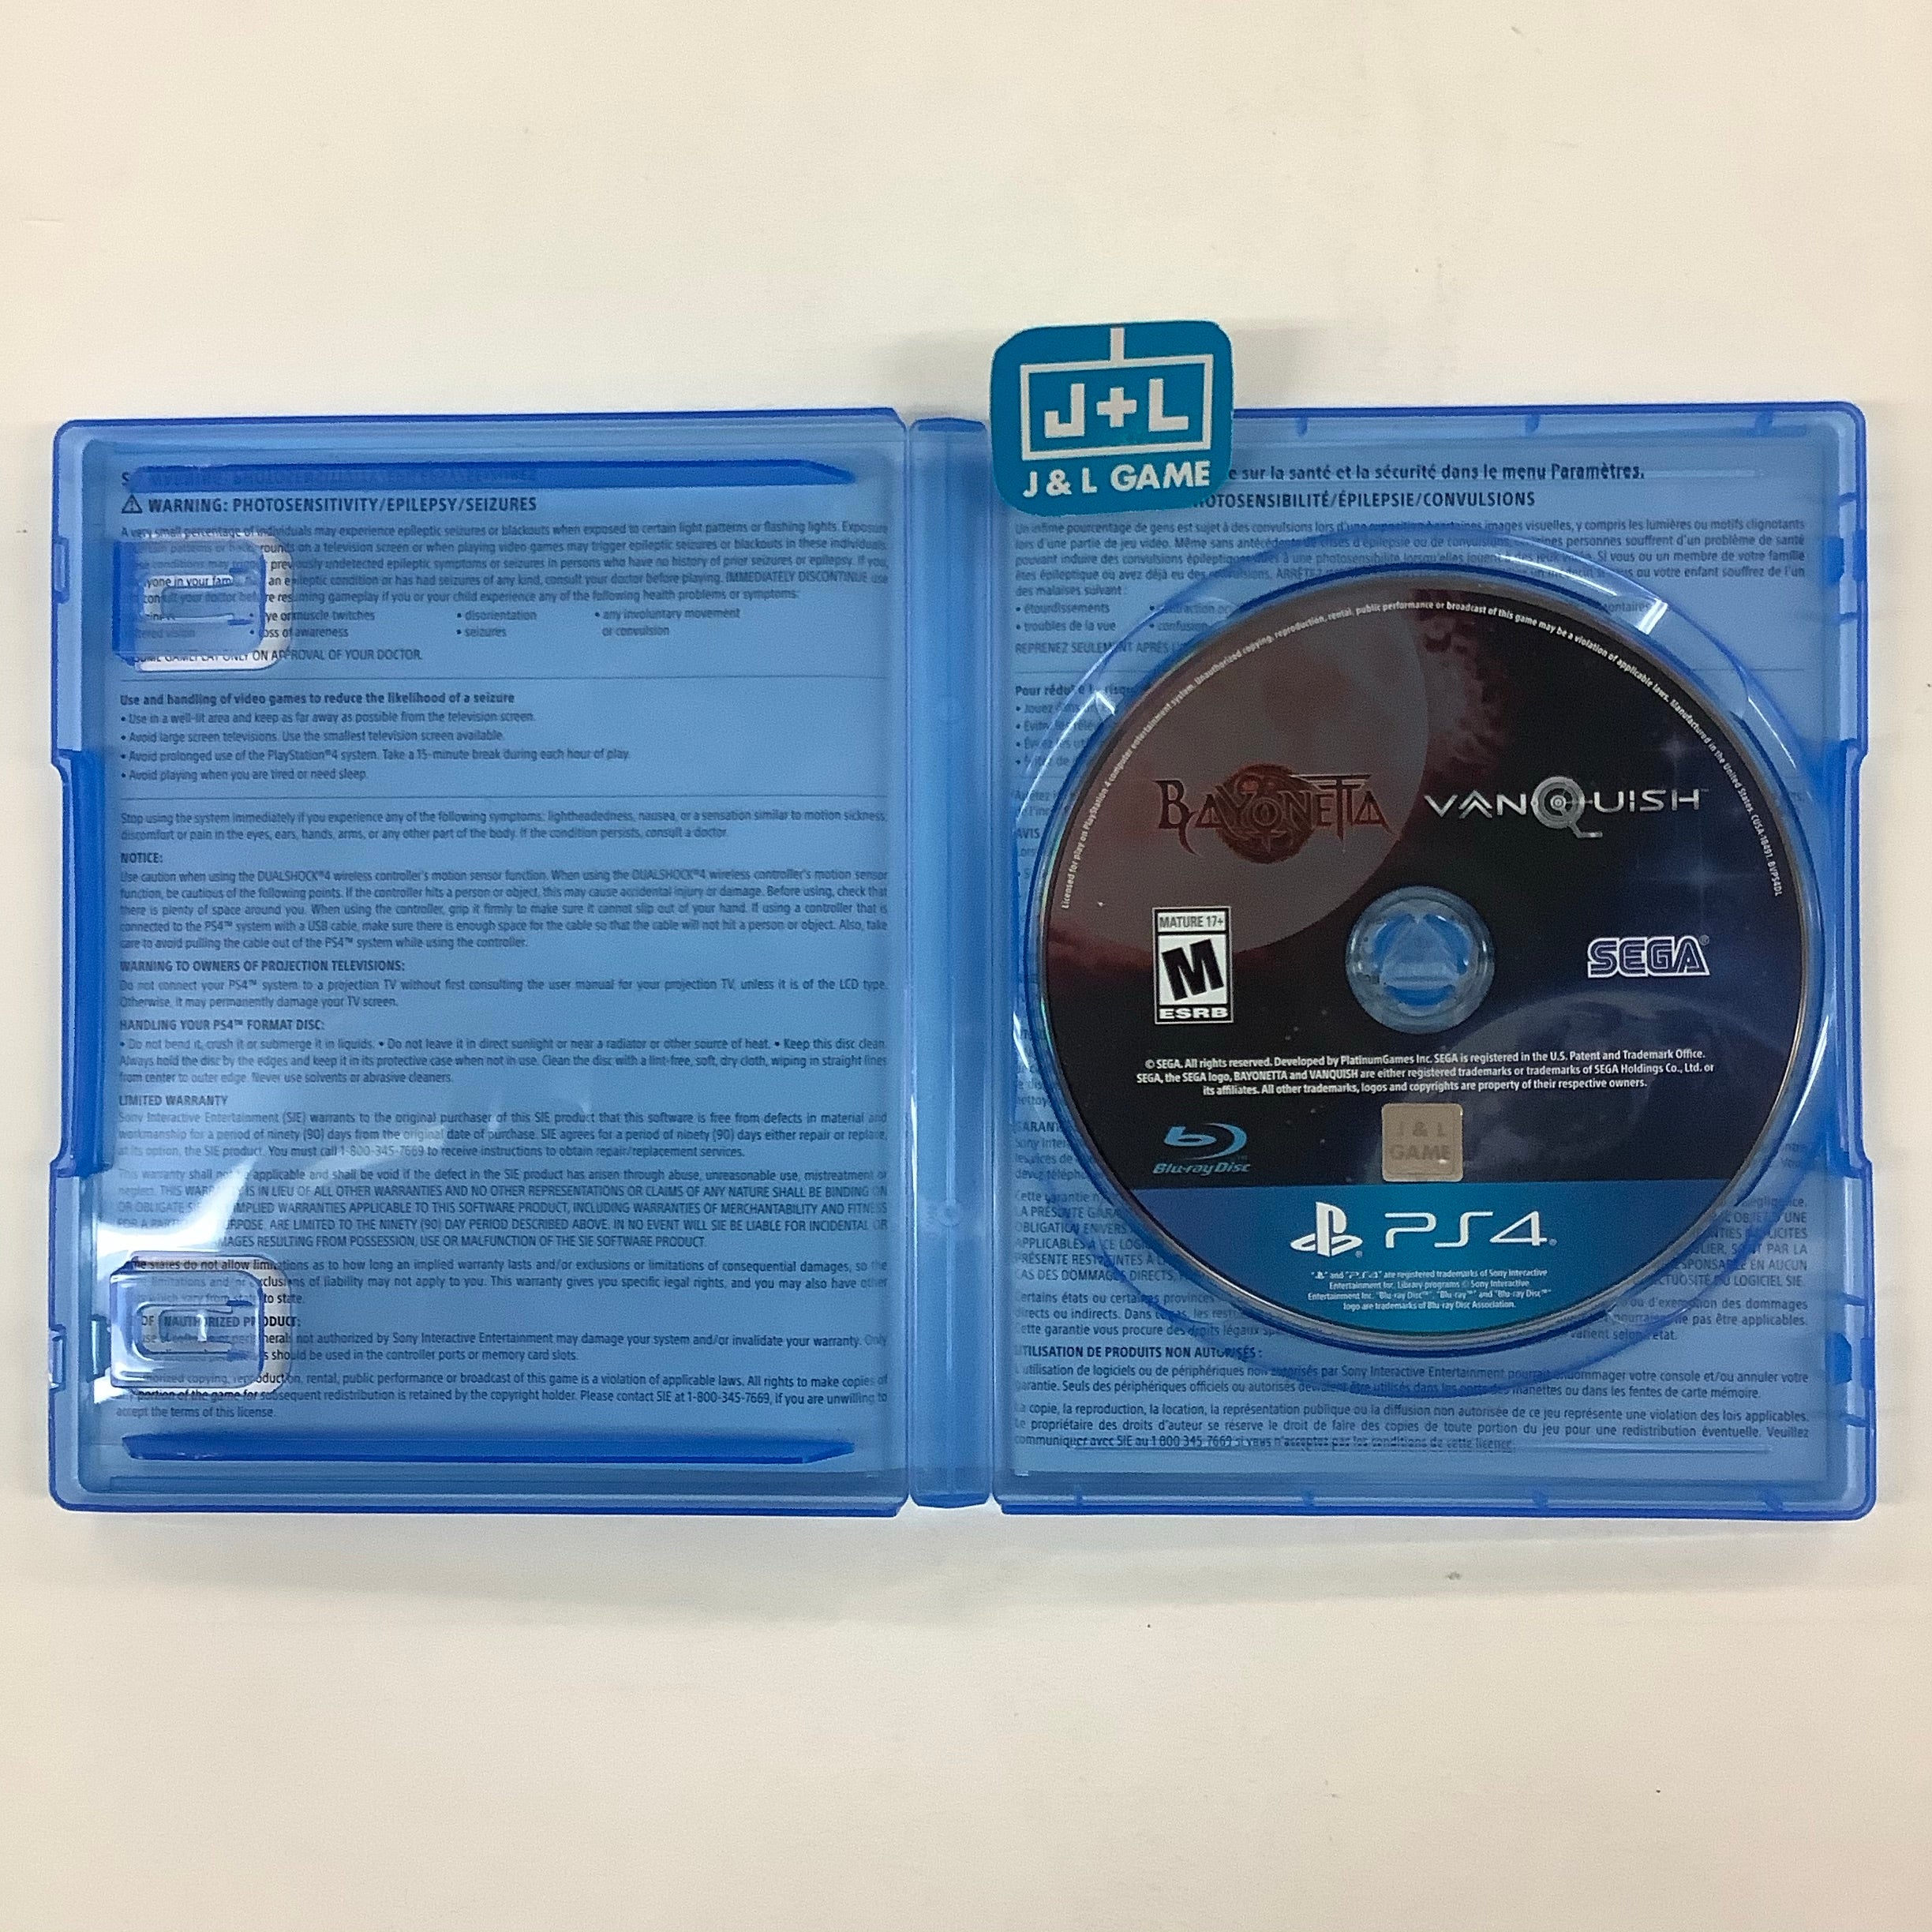 Bayonetta & Vanquish 10th Anniversary Bundle - (PS4) PlayStation 4 [Pre-Owned] Video Games SEGA   